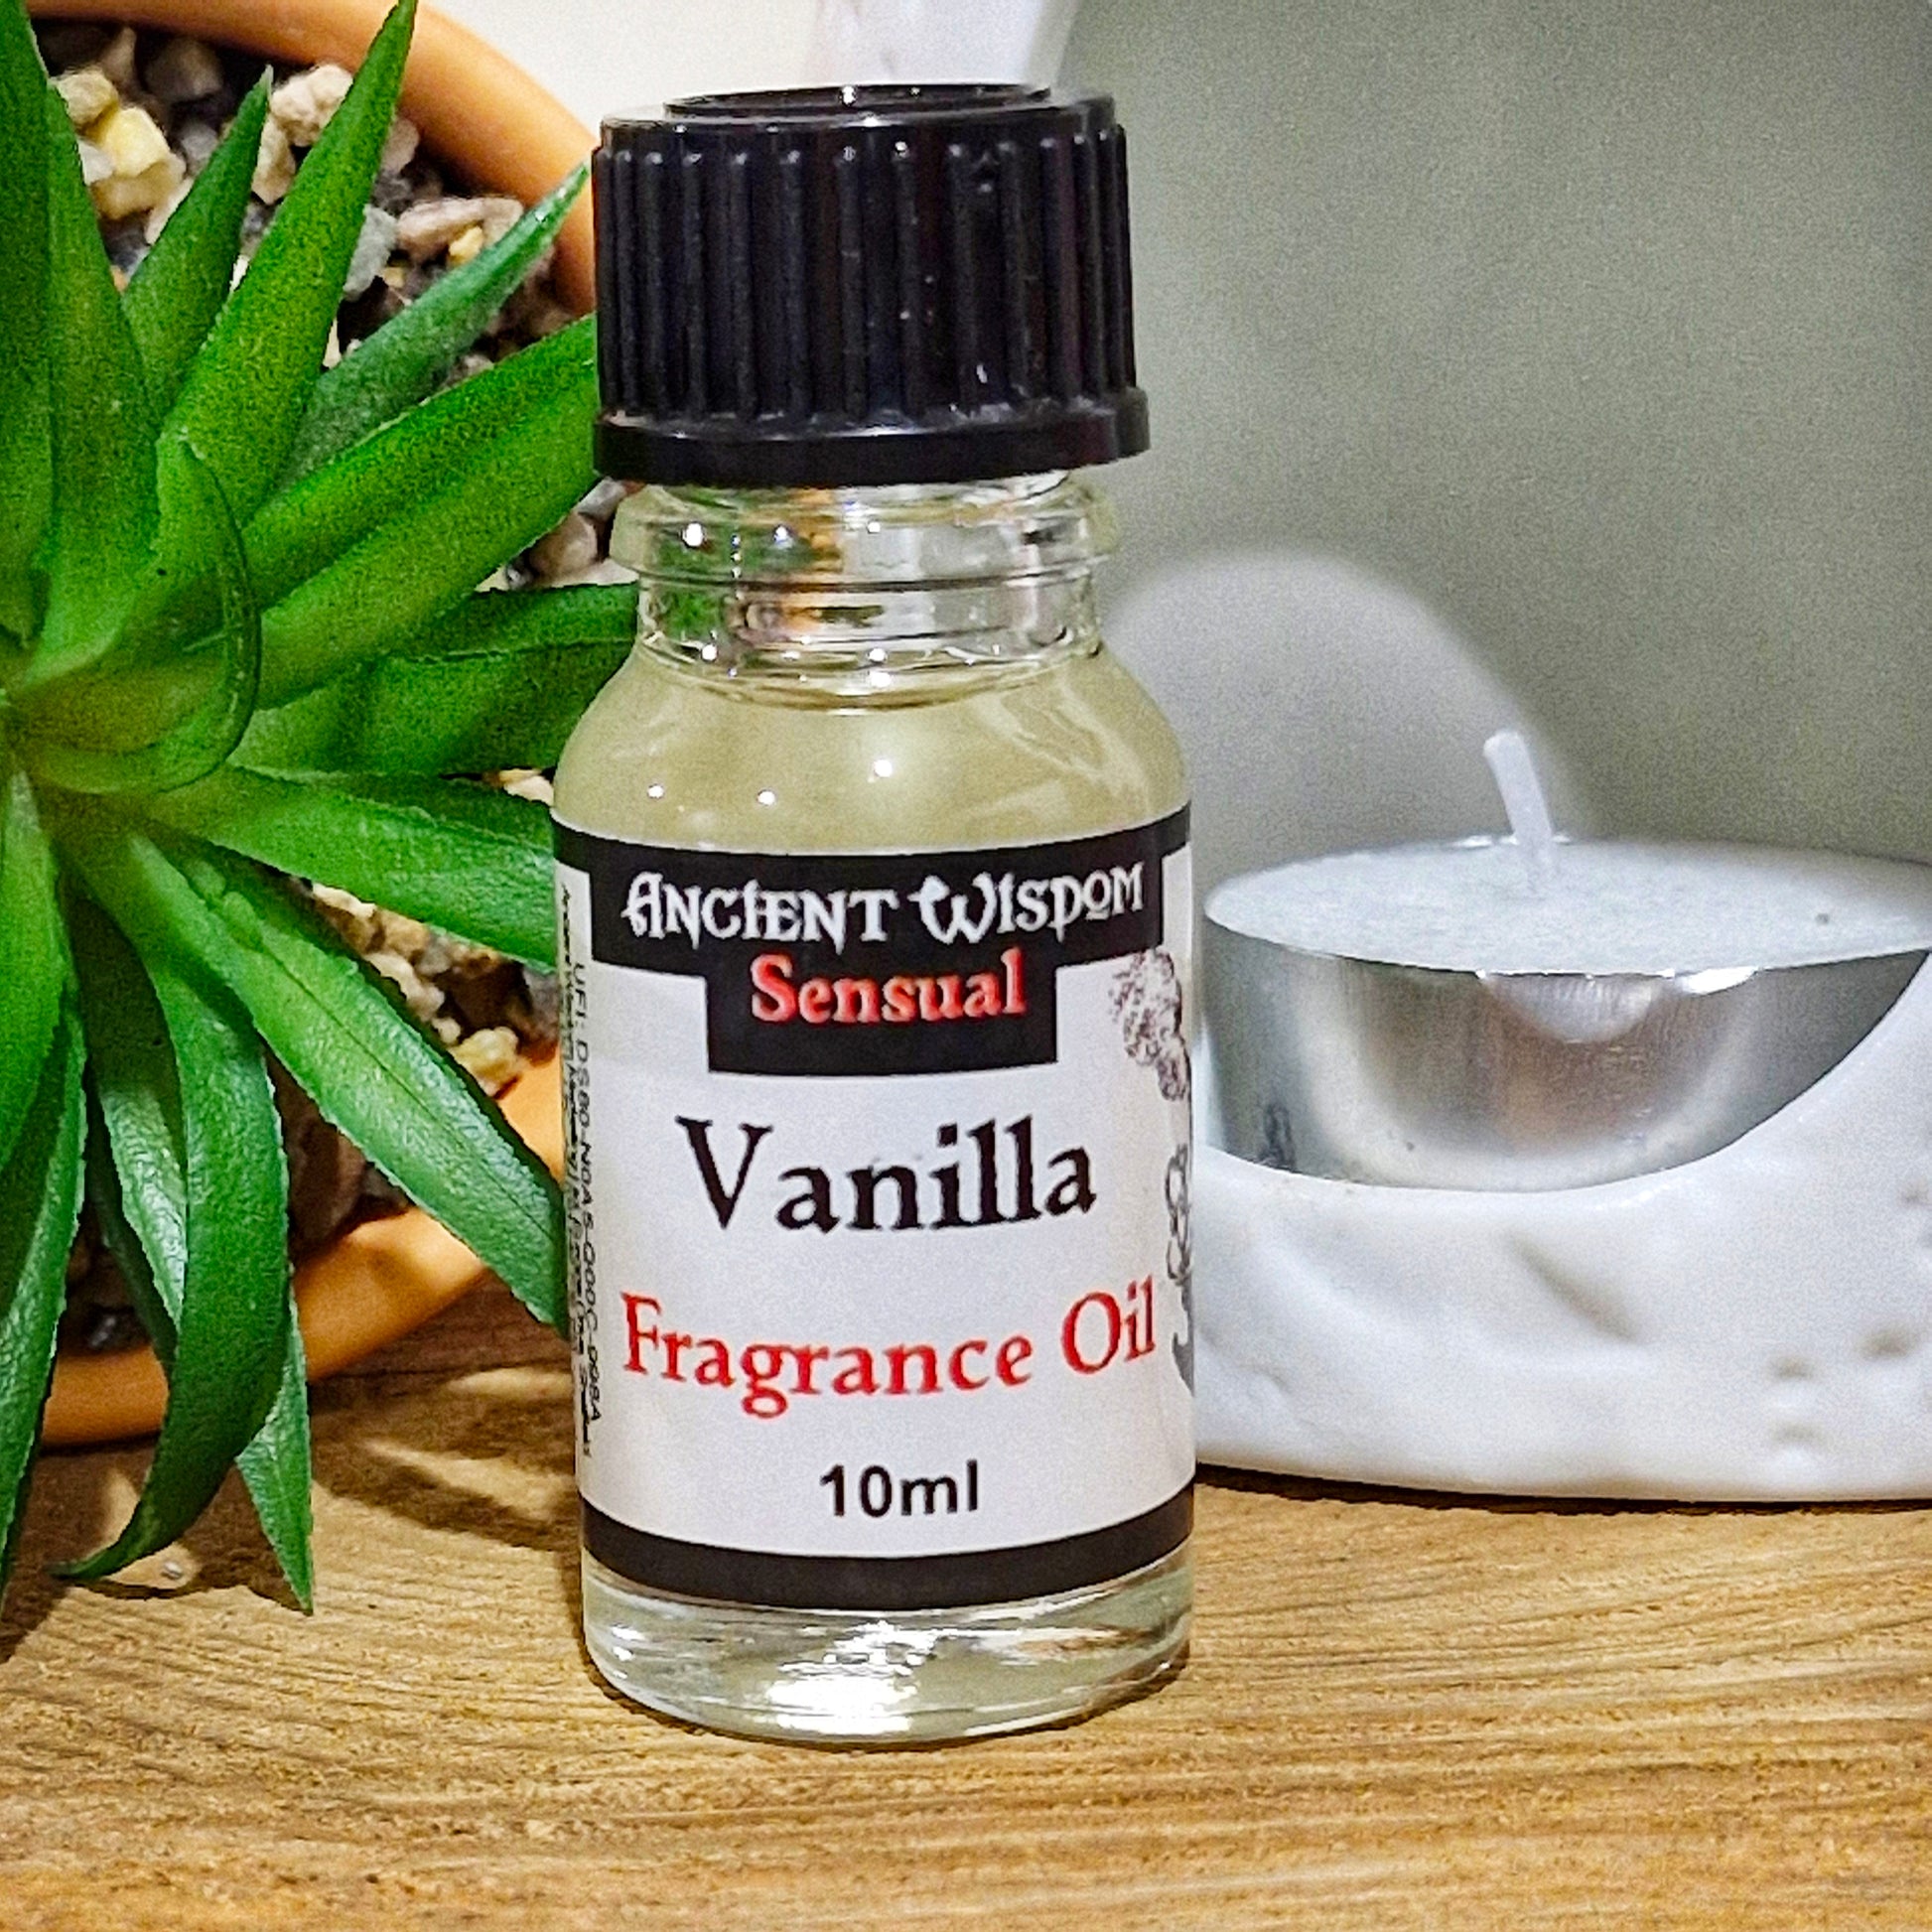 A 10ml bottle of vanilla fragrance oil 